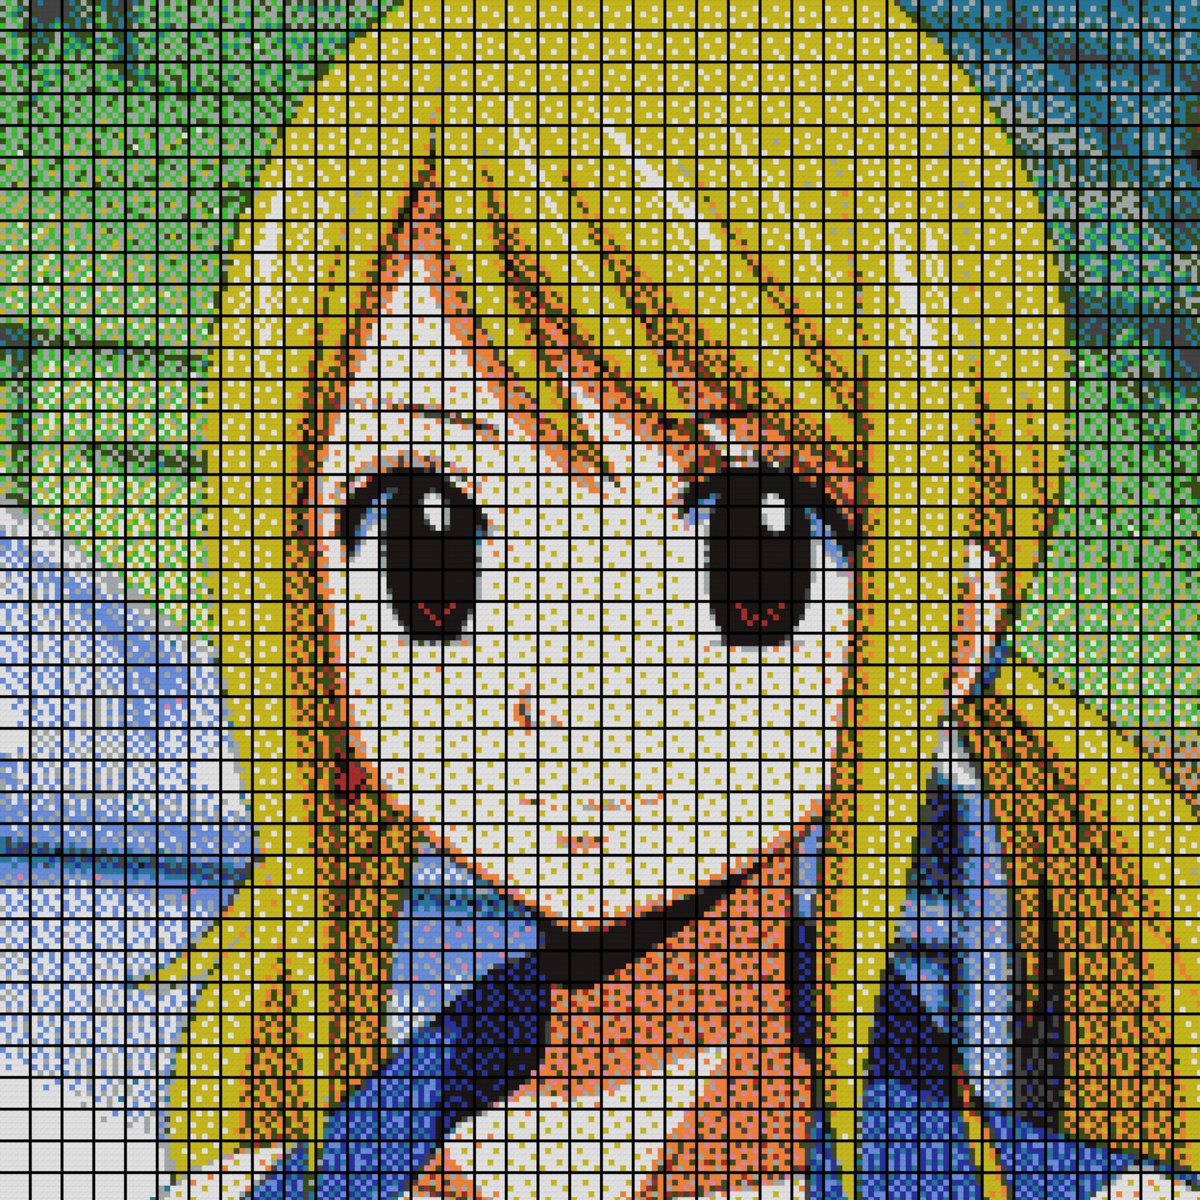 Rajid on Twitter Ram in pixel Art  aidandahlan pixel pixelart  pixelartwork pixelartindo aseprite asepriteart 8bit 16bit drawing  draw Ram rezero anime Emilia Subaru httpstcoIXBNhejQv1  Twitter